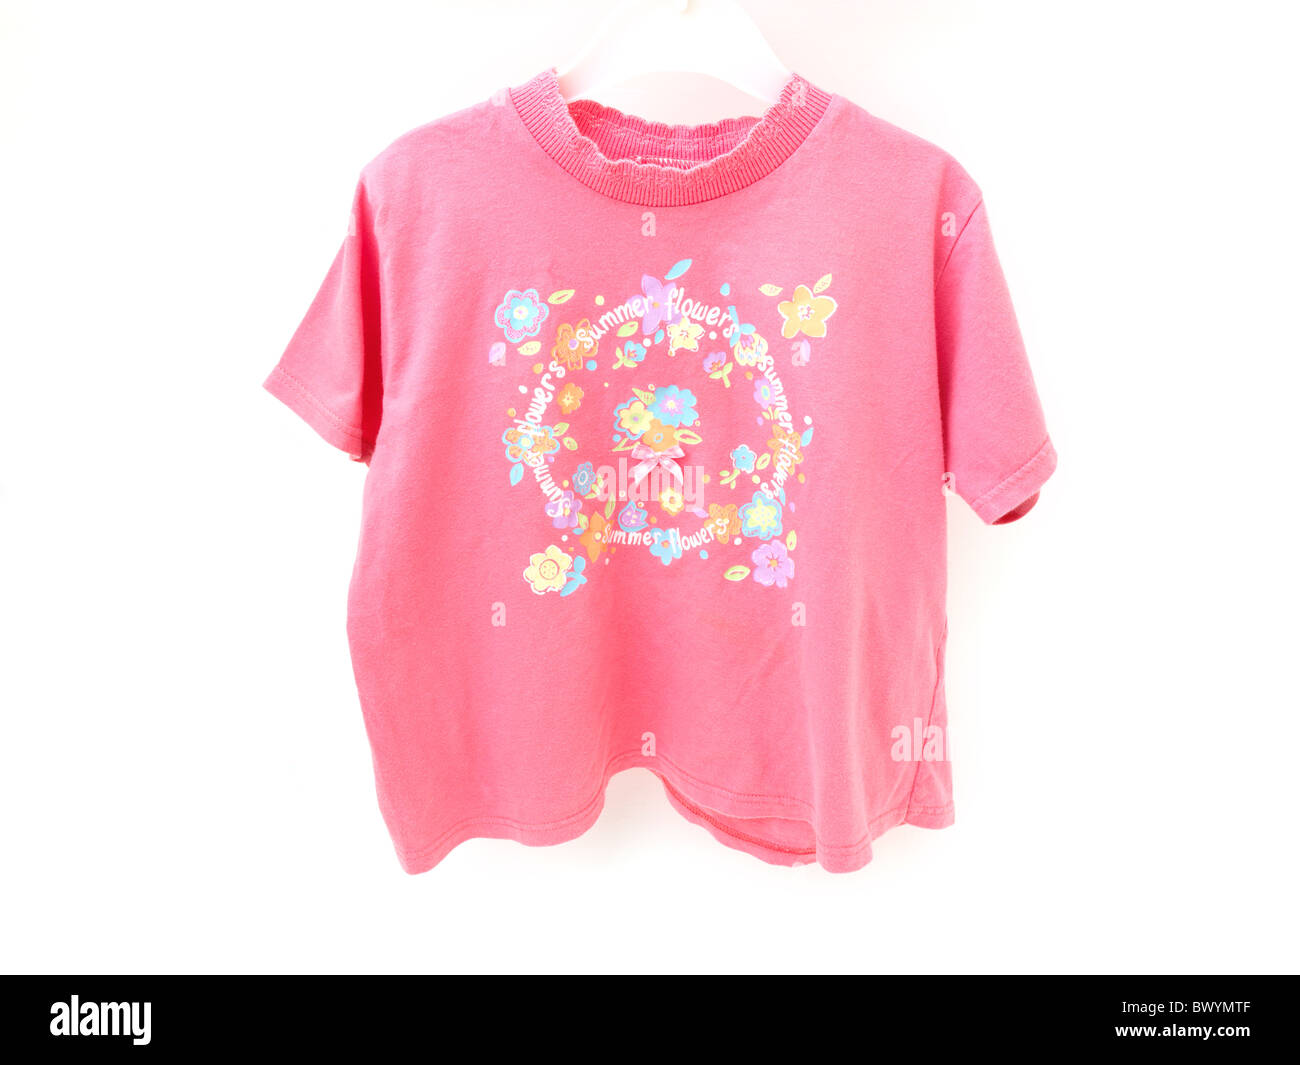 Camiseta con flores fotografías e imágenes de alta resolución - Alamy